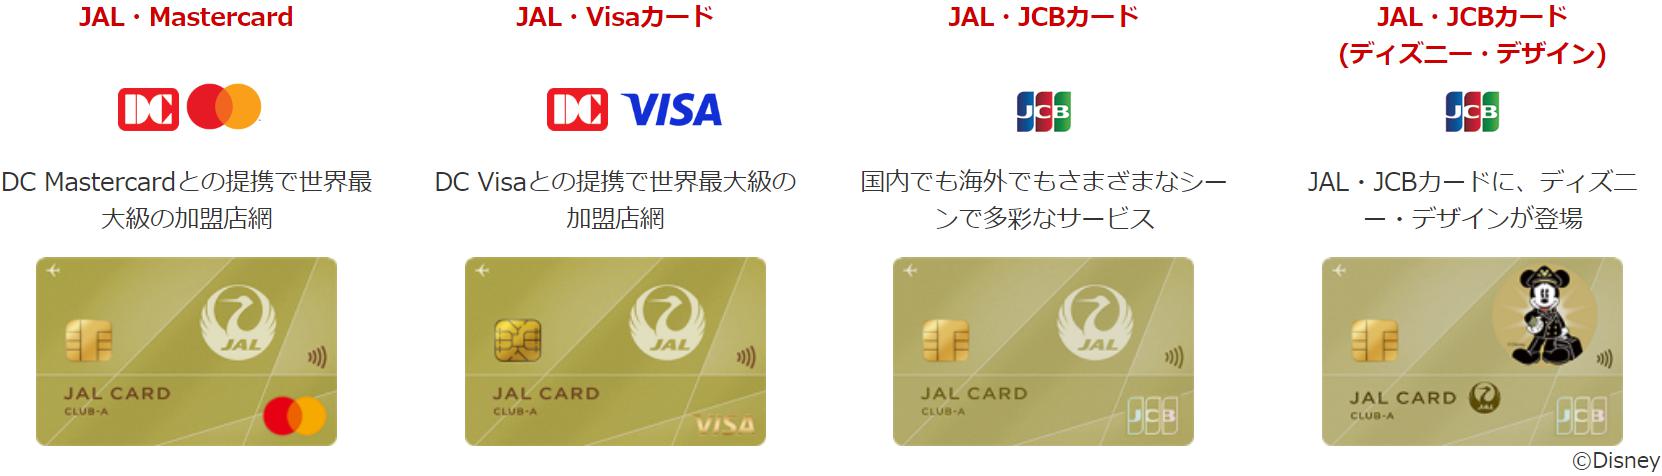 JAL Club A カードのラインナップ